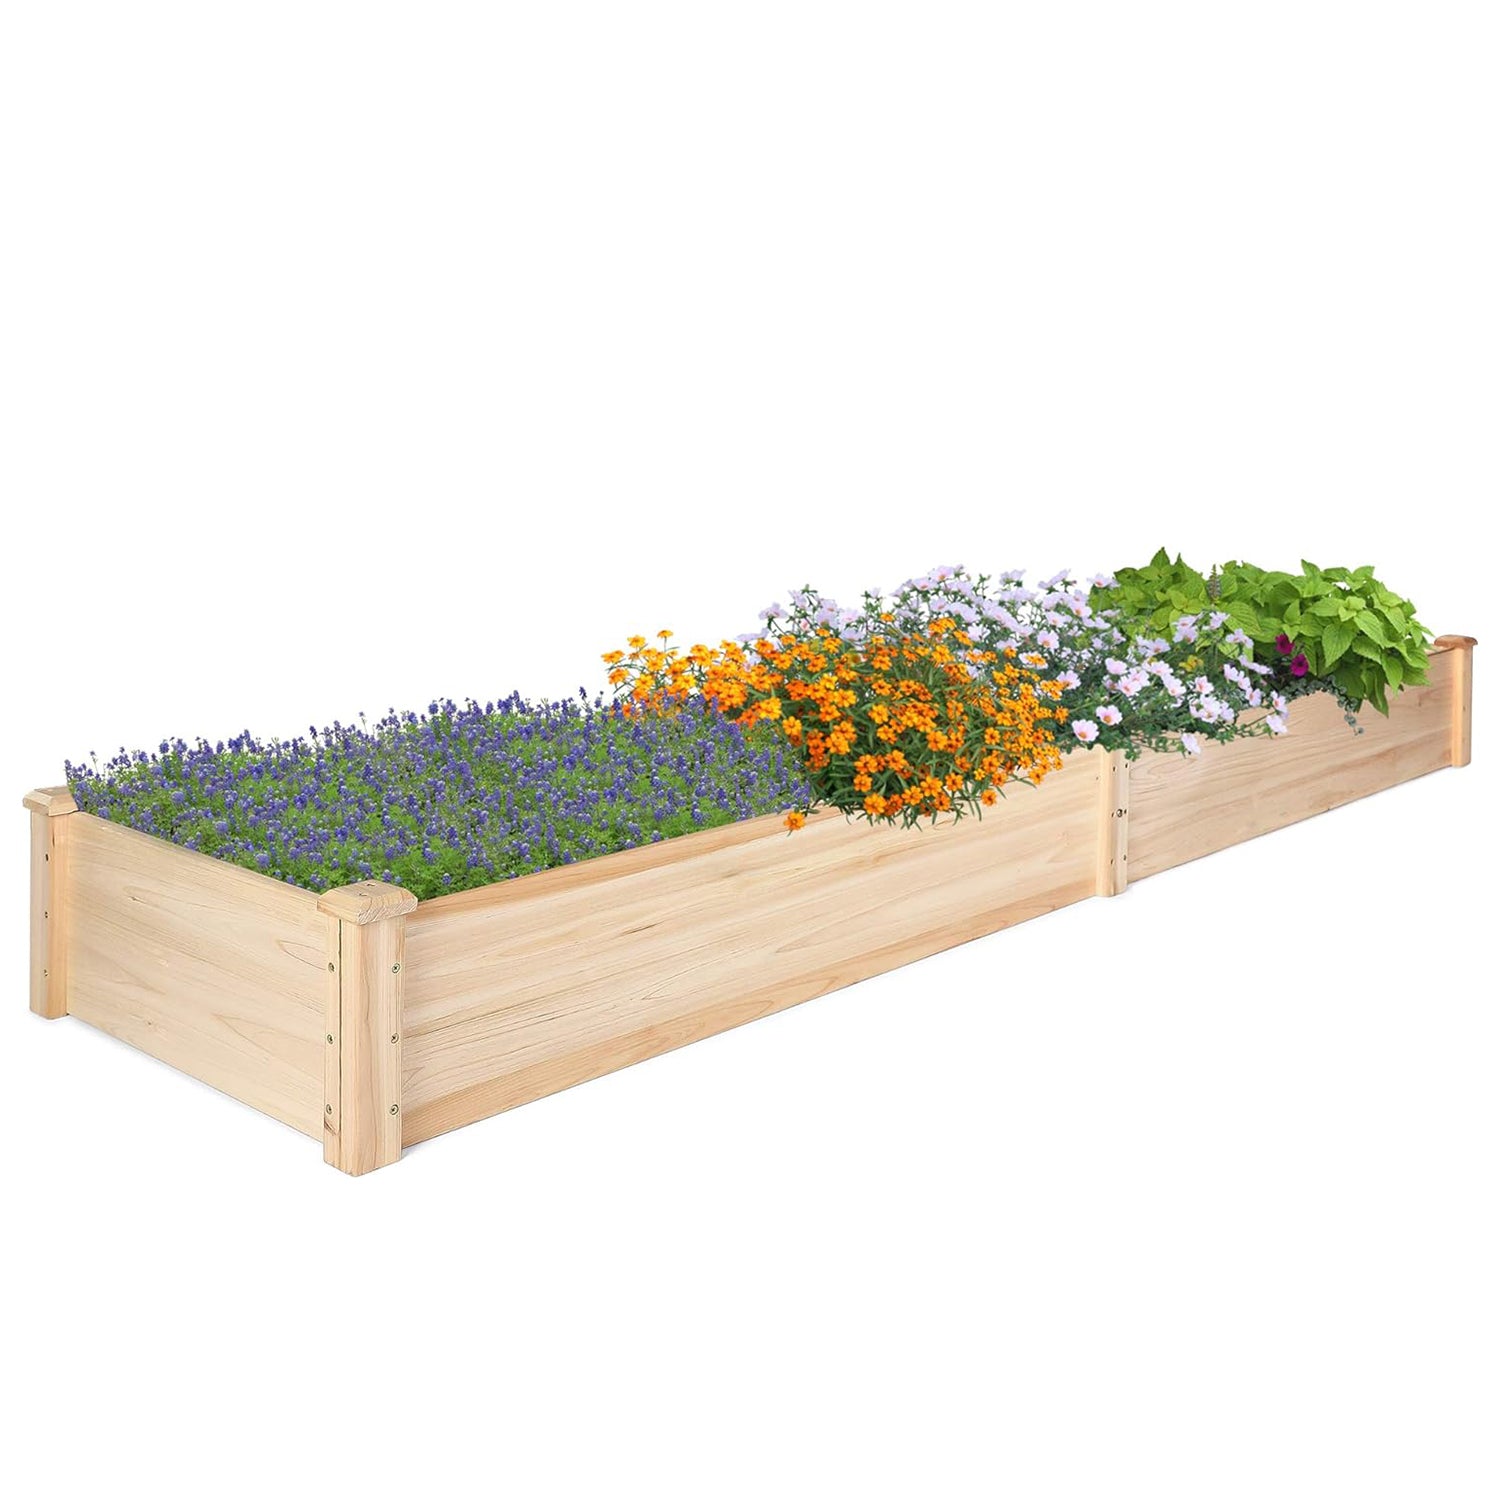 Raised Garden Bed 8 x 2 Ft Outdoor Natural Fir Wood Elevated Planter Garden Box for Vegetable Flower Herb